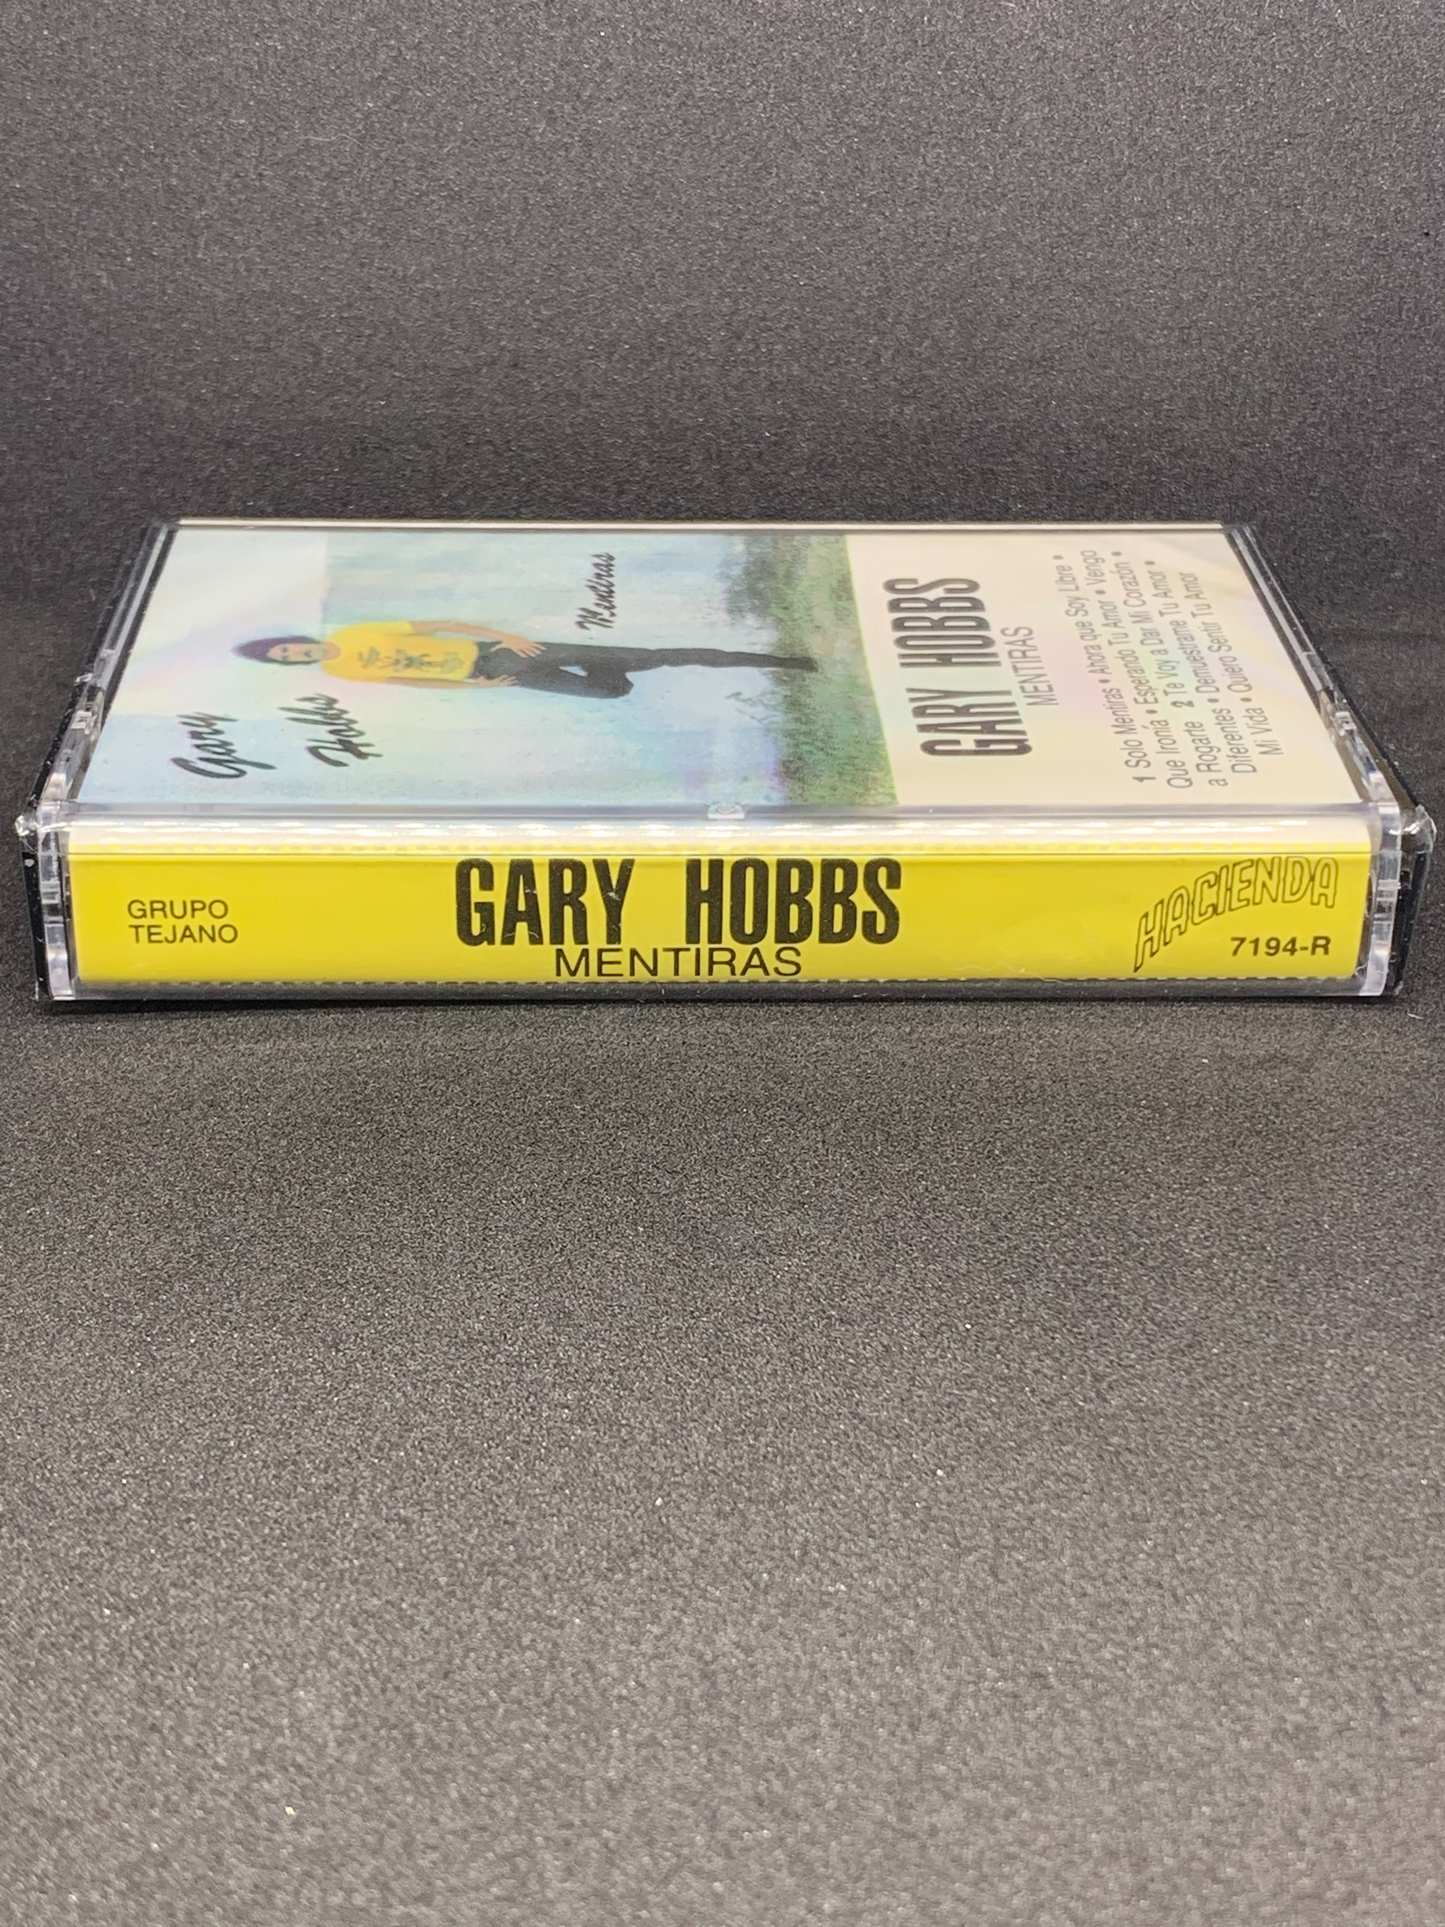 Gary Hobbs - Mentiras (Cassette)